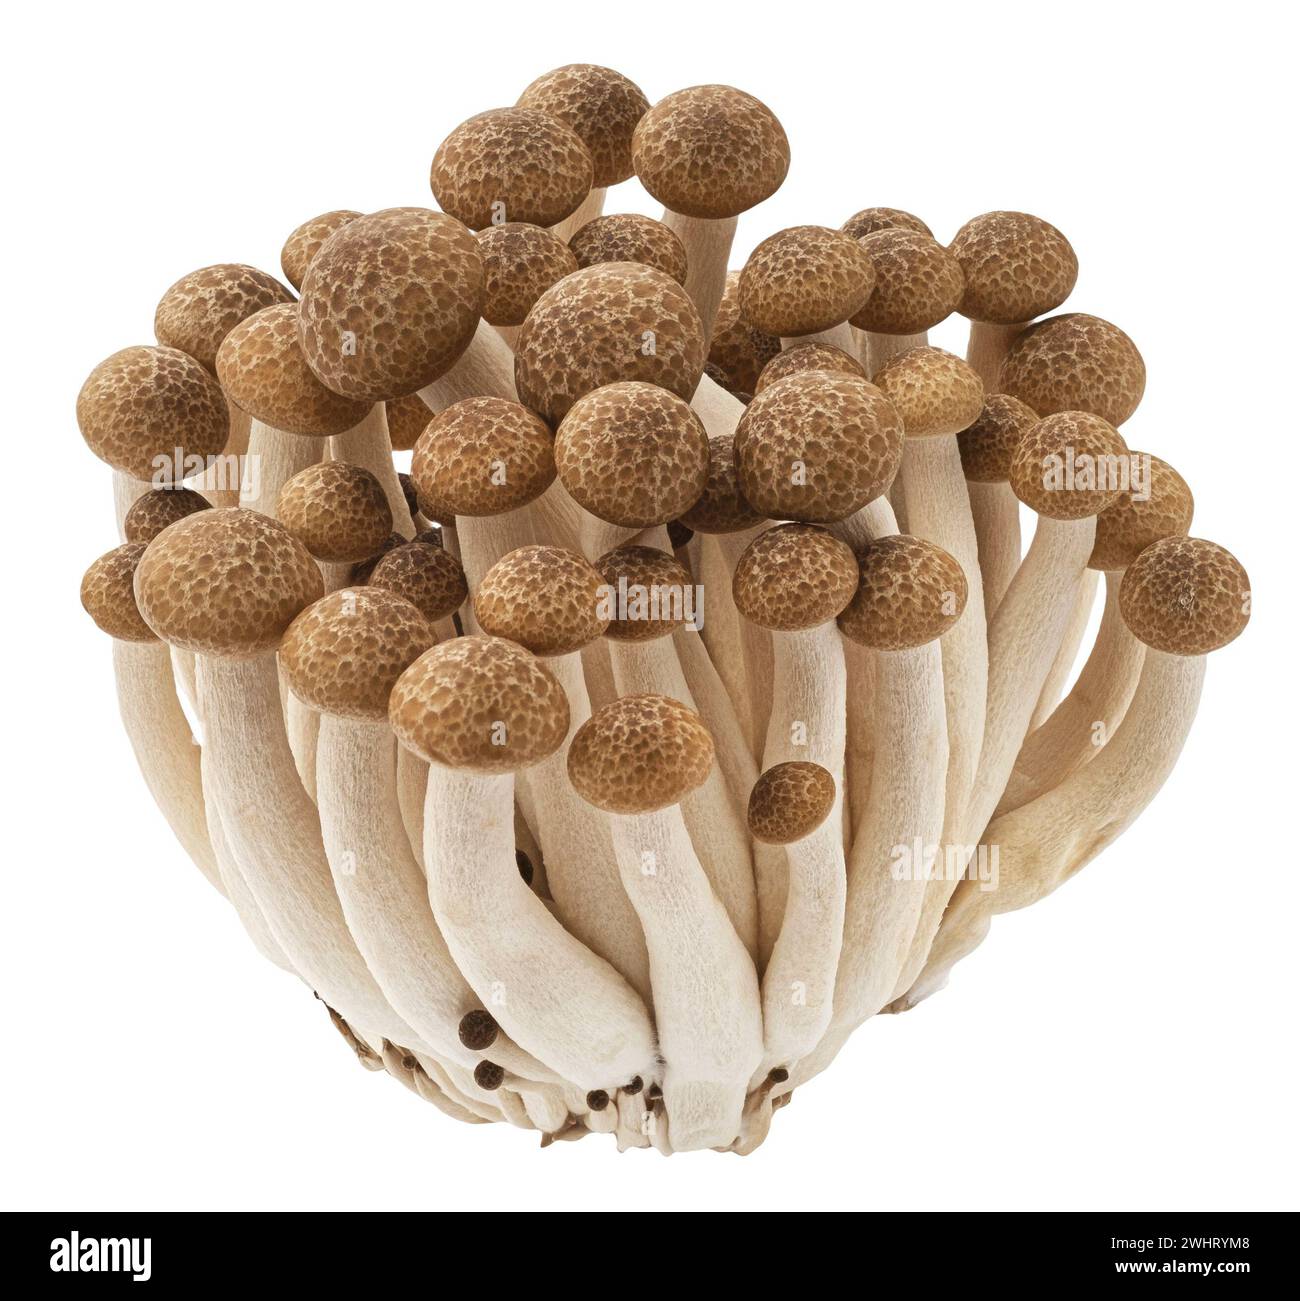 Shimeji mushroom, brown beech mushrooms isolated on white background Stock Photo